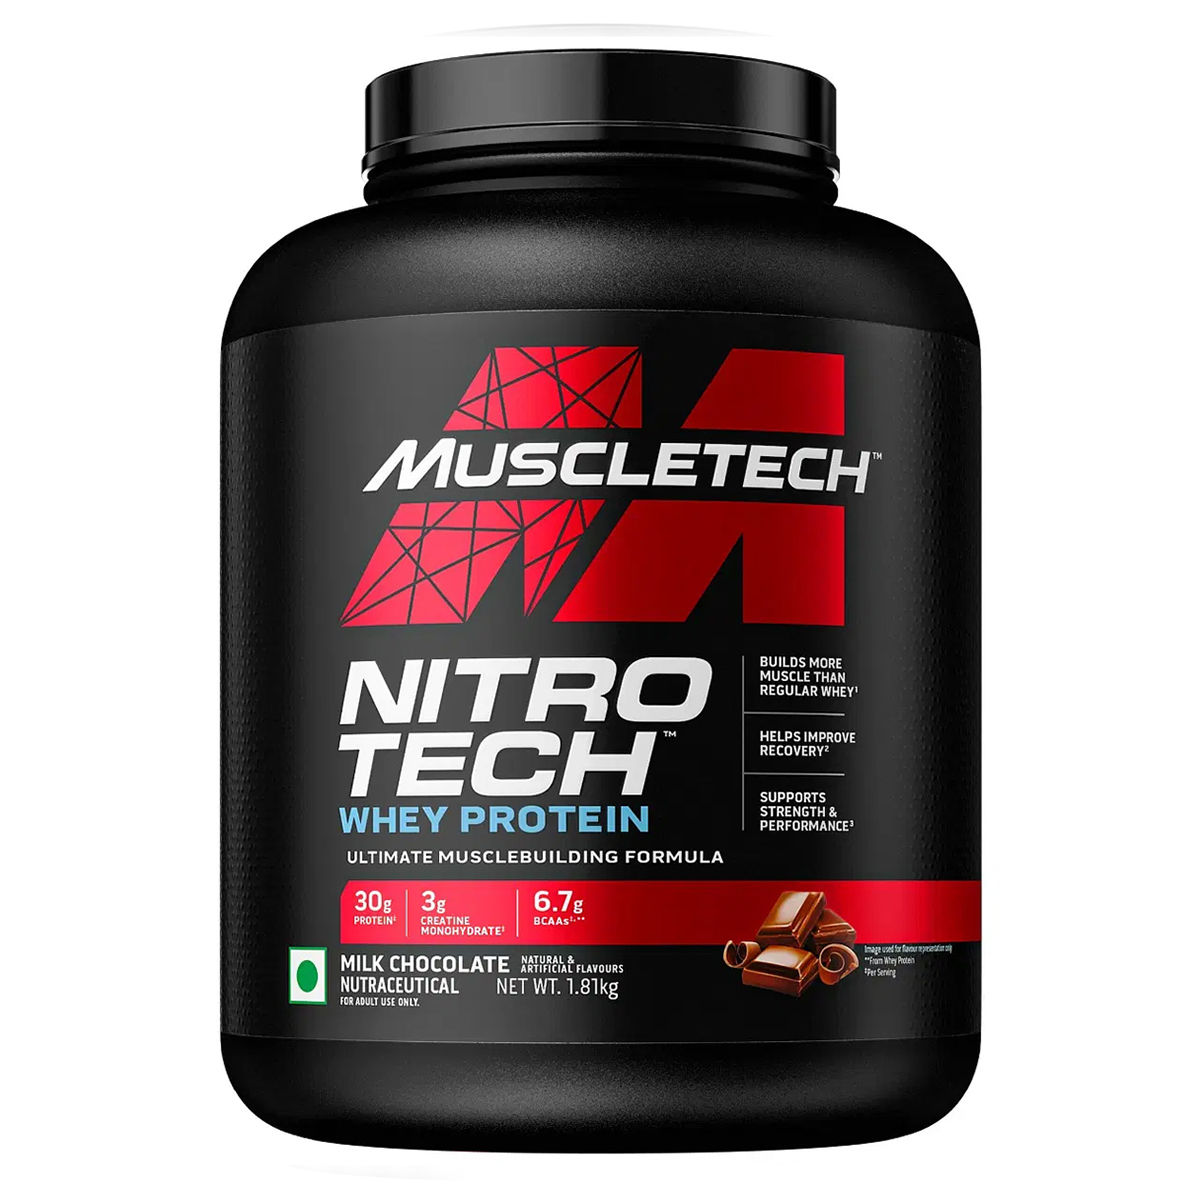 Buy Muscletech Nitrotech Whey Protein Milk Chocolate Flavour Powder, 1.81 kg Online